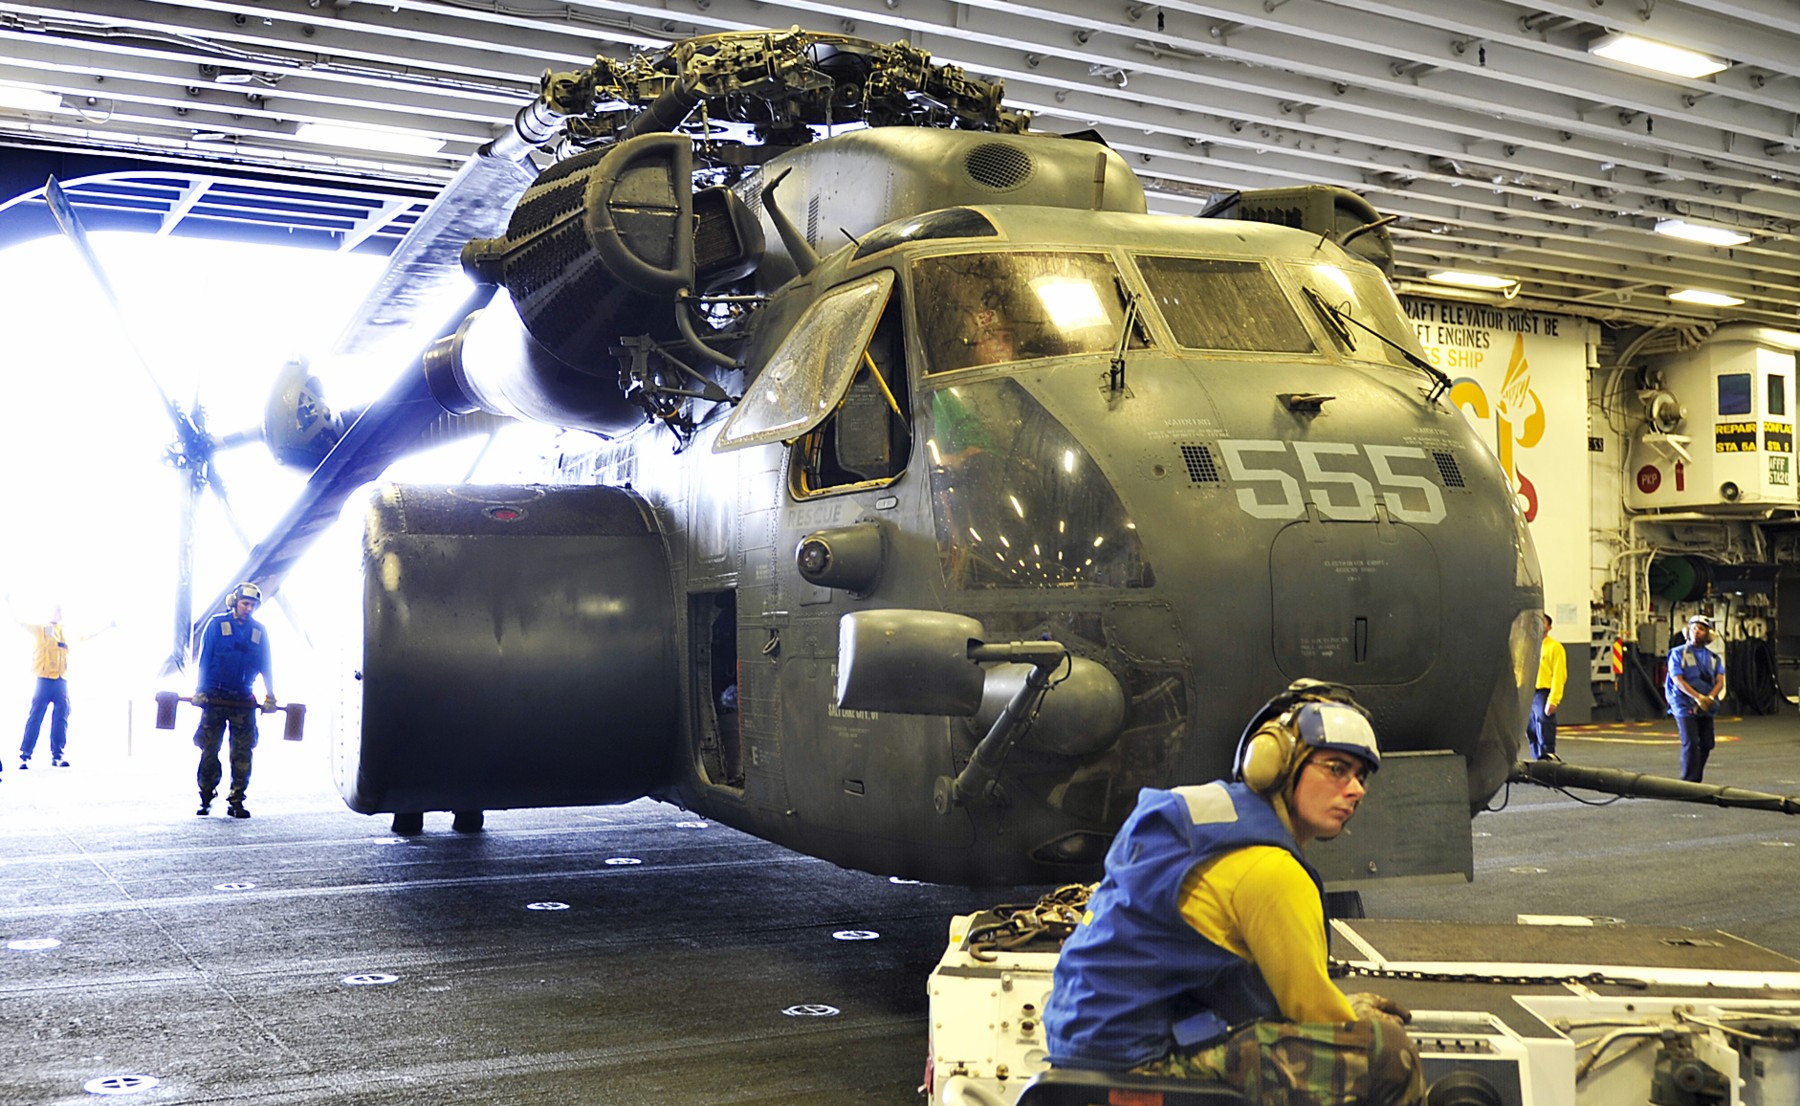 hm-14 vanguard helicopter mine countermeasures squadron navy mh-53e sea dragon 149